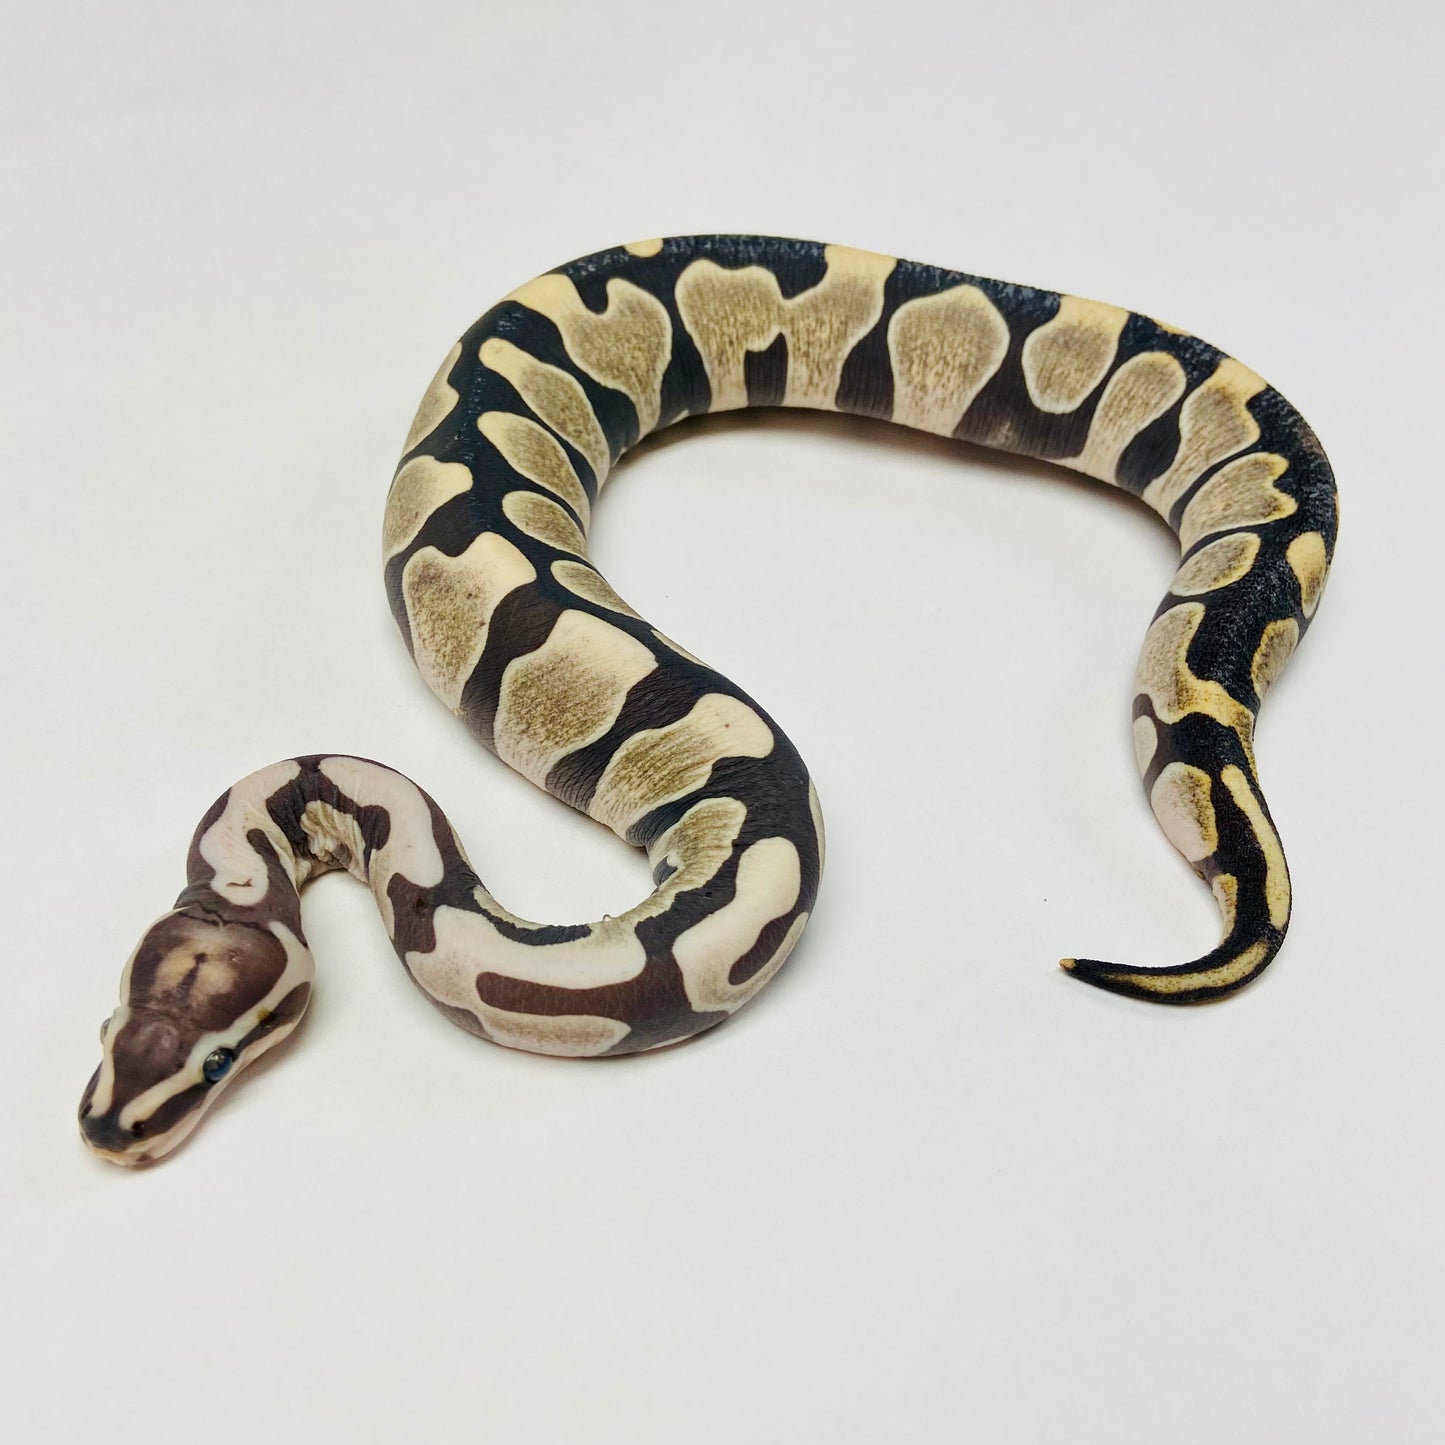 Scaleless Ball Python- Female #2023F01